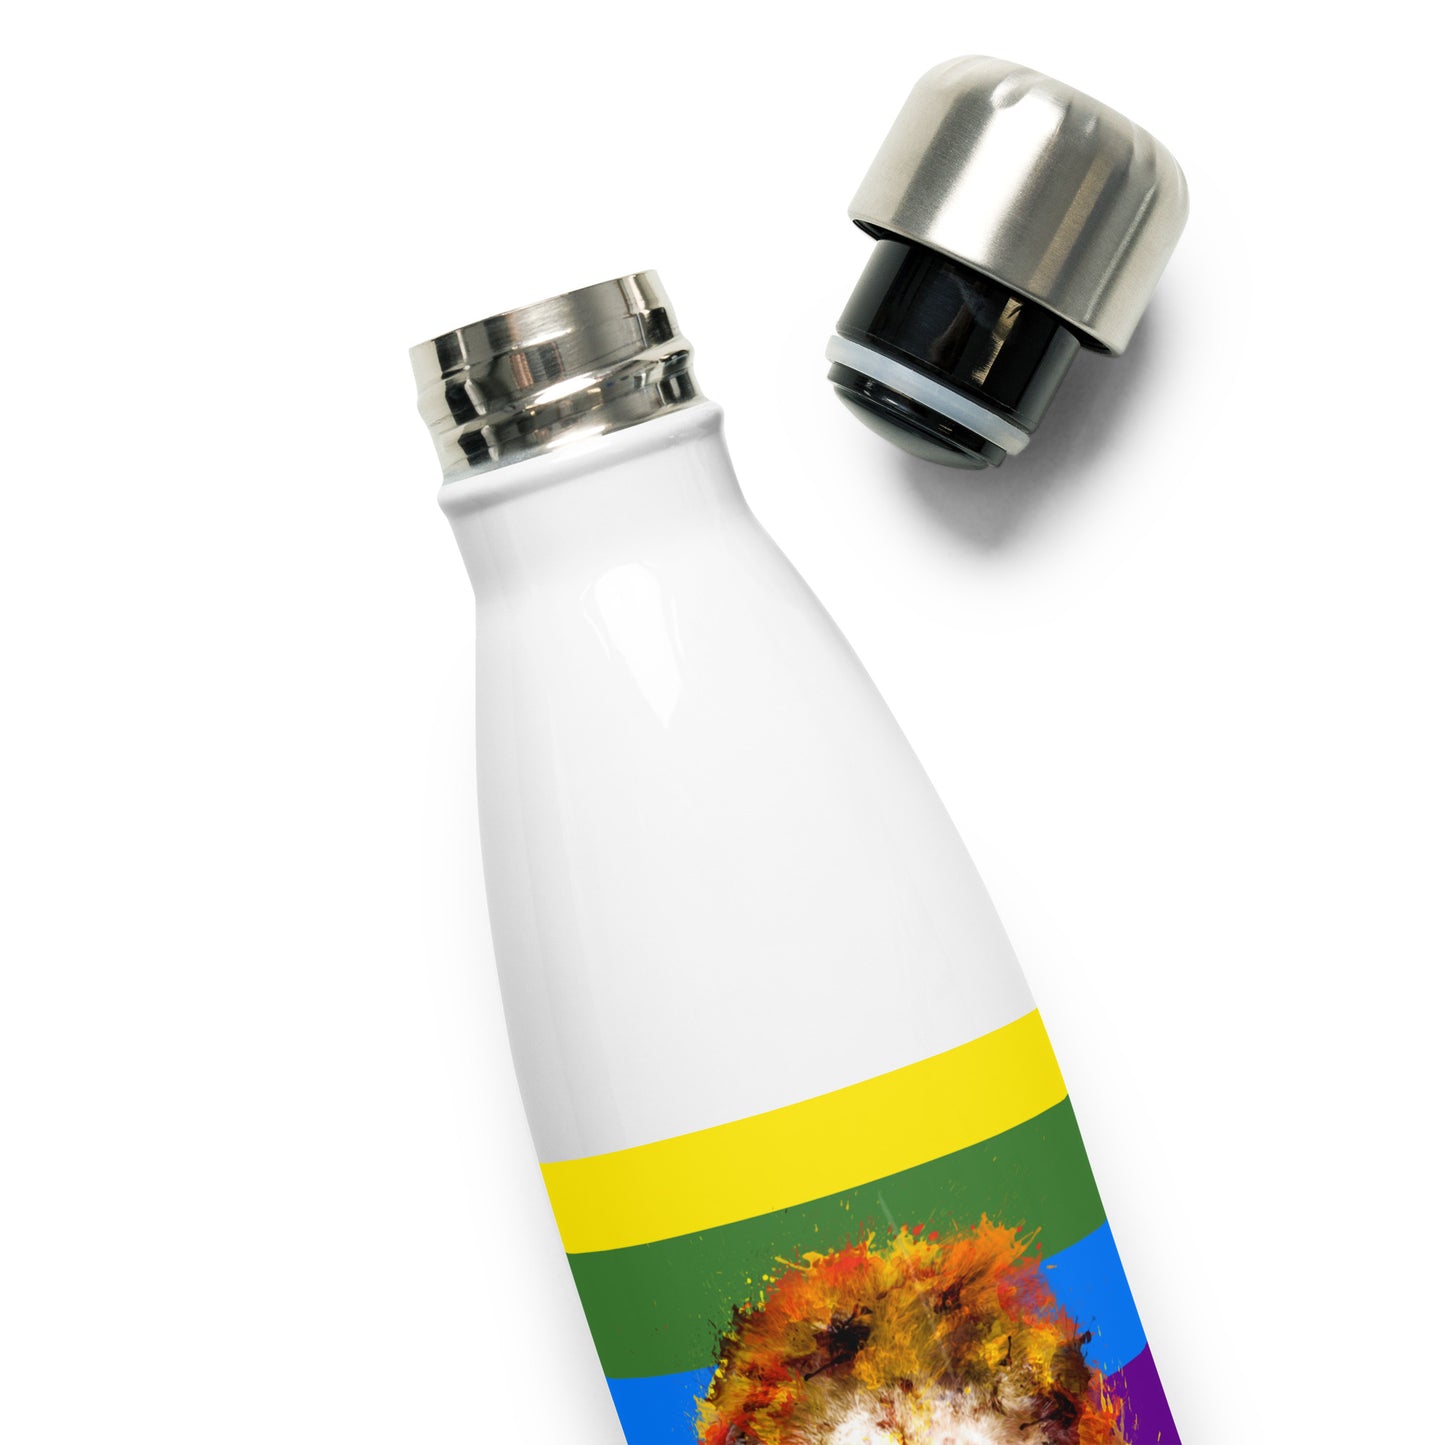 Rainbow Stainless Steel Water Bottle